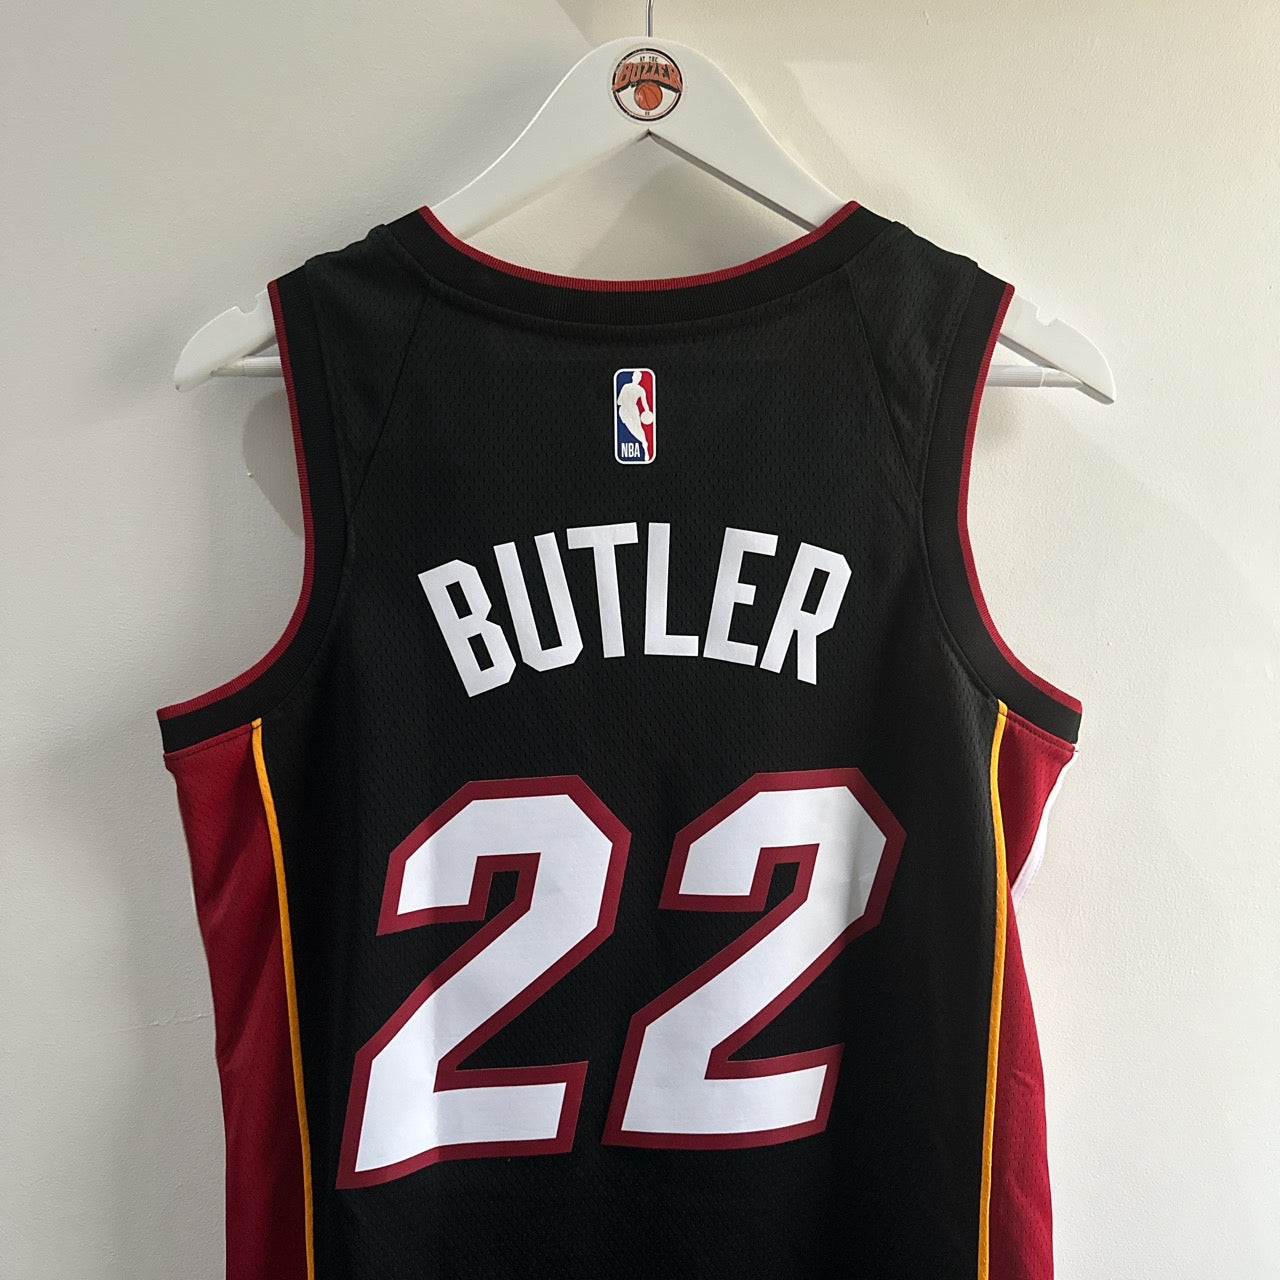 Miami Heat Jimmy Butler Nike jersey - Small